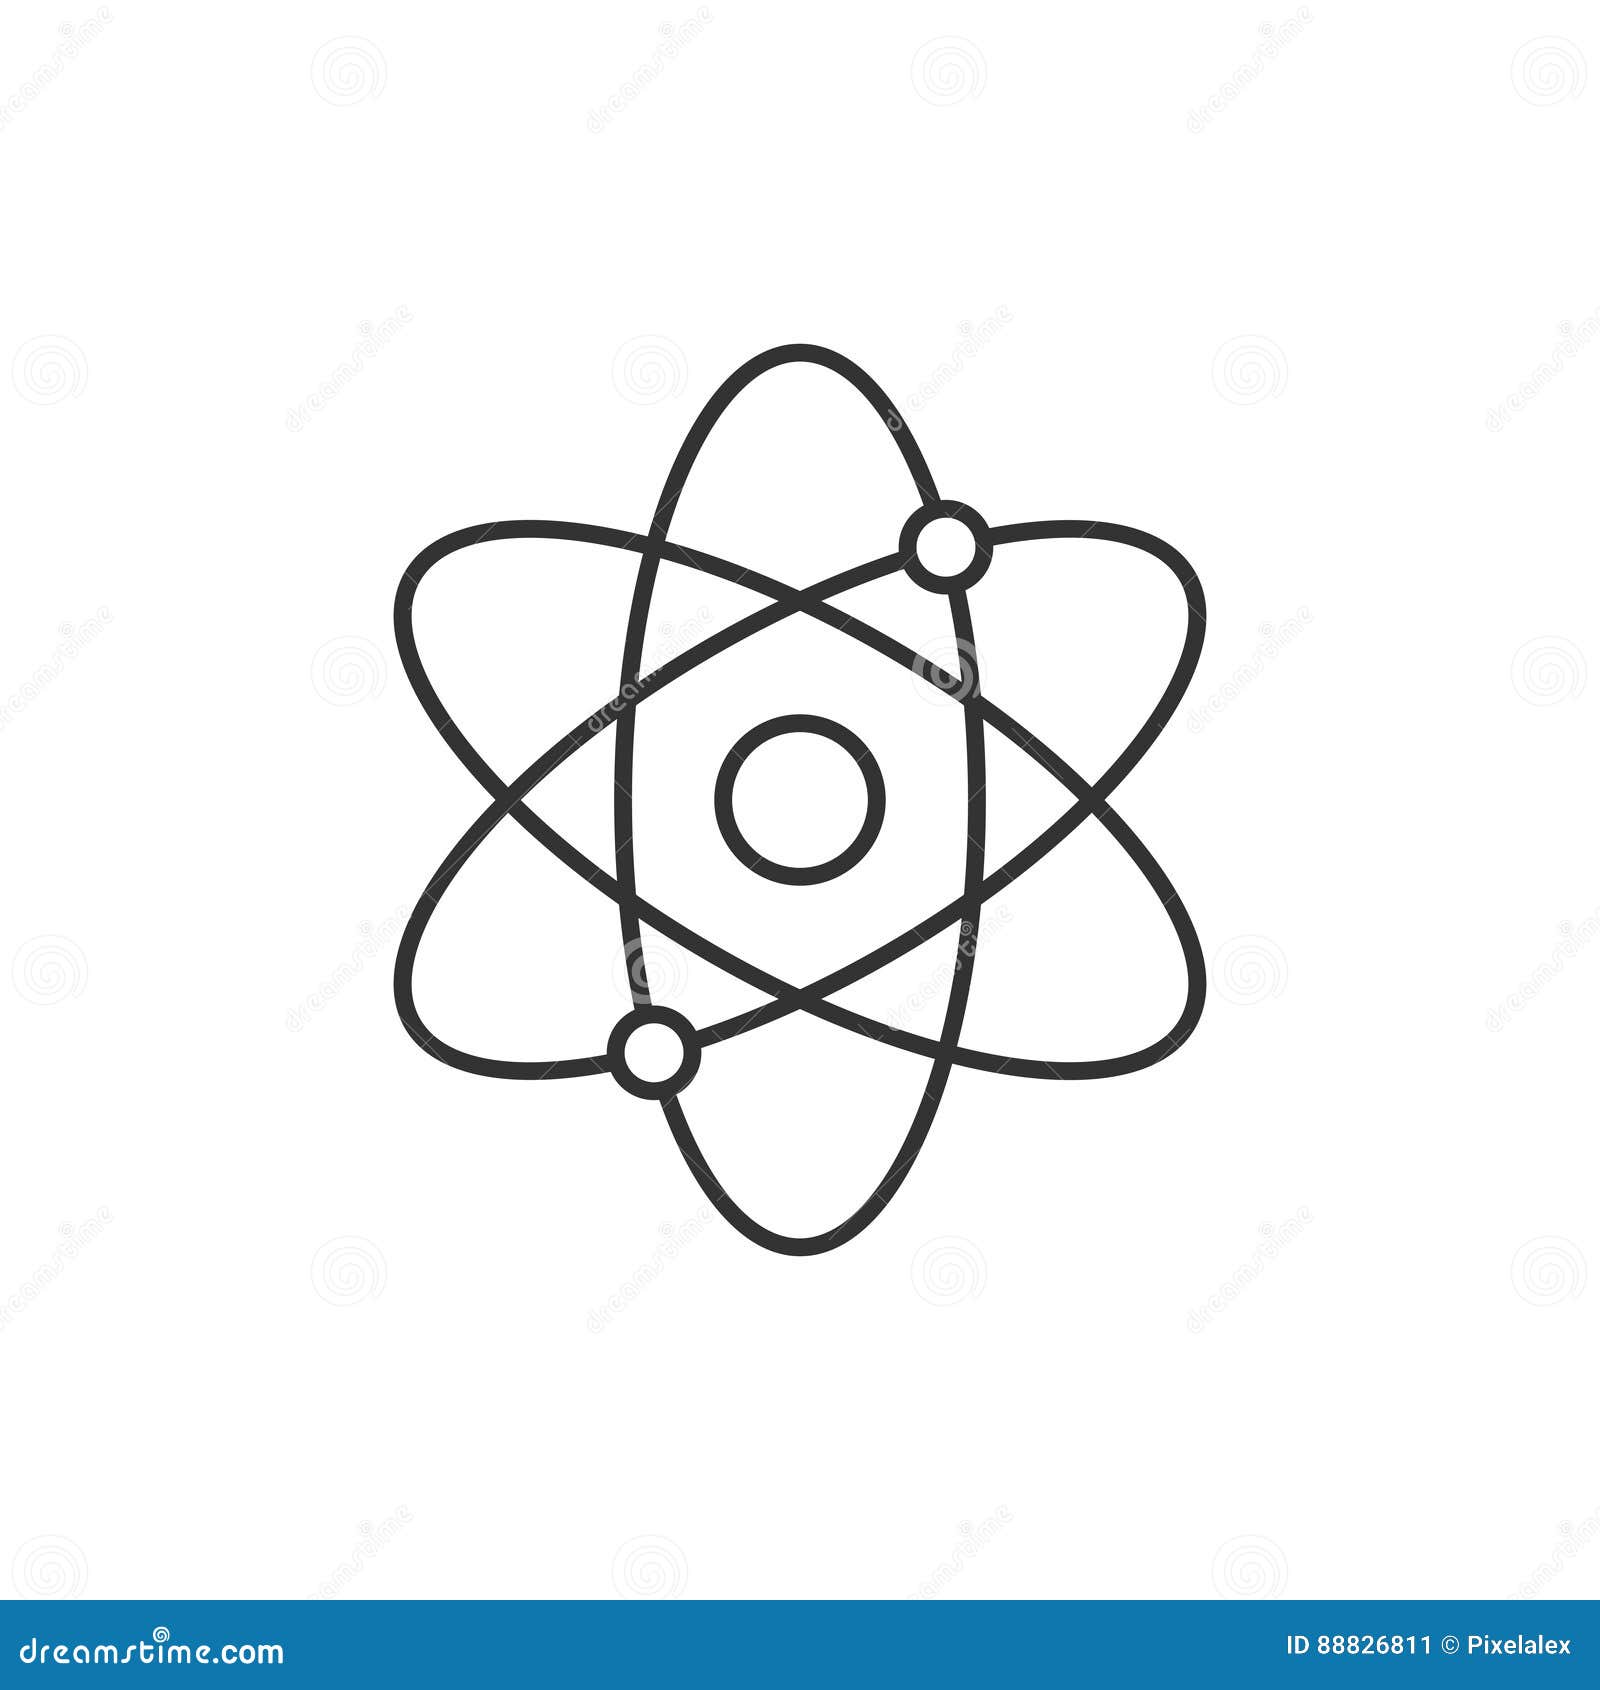 Atomic Structure Line Icon Stock Vector. Illustration Of Neutron - 88826811